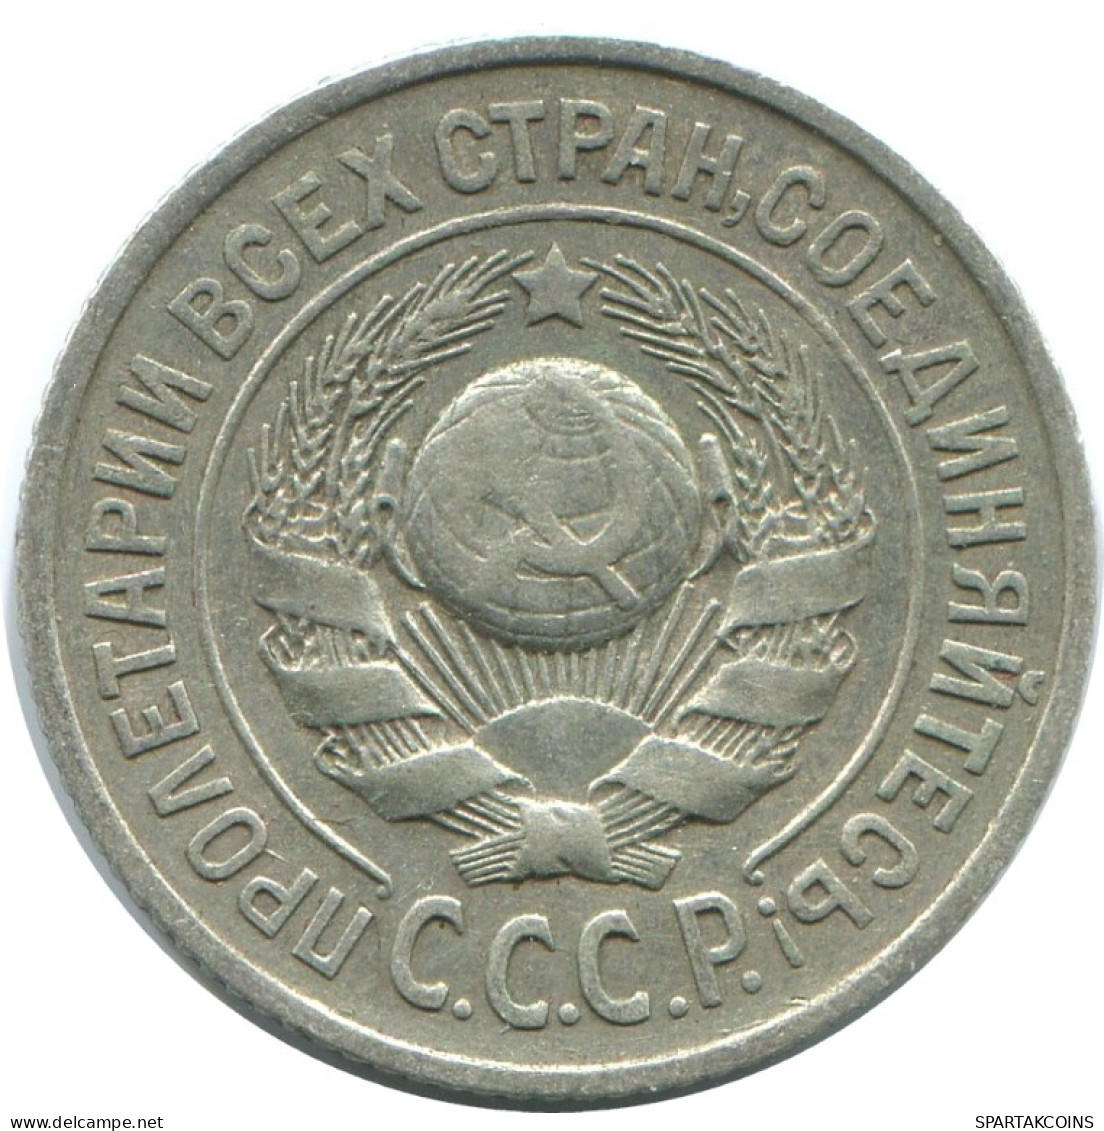 15 KOPEKS 1925 RUSSIA USSR SILVER Coin HIGH GRADE #AF271.4.U.A - Russia